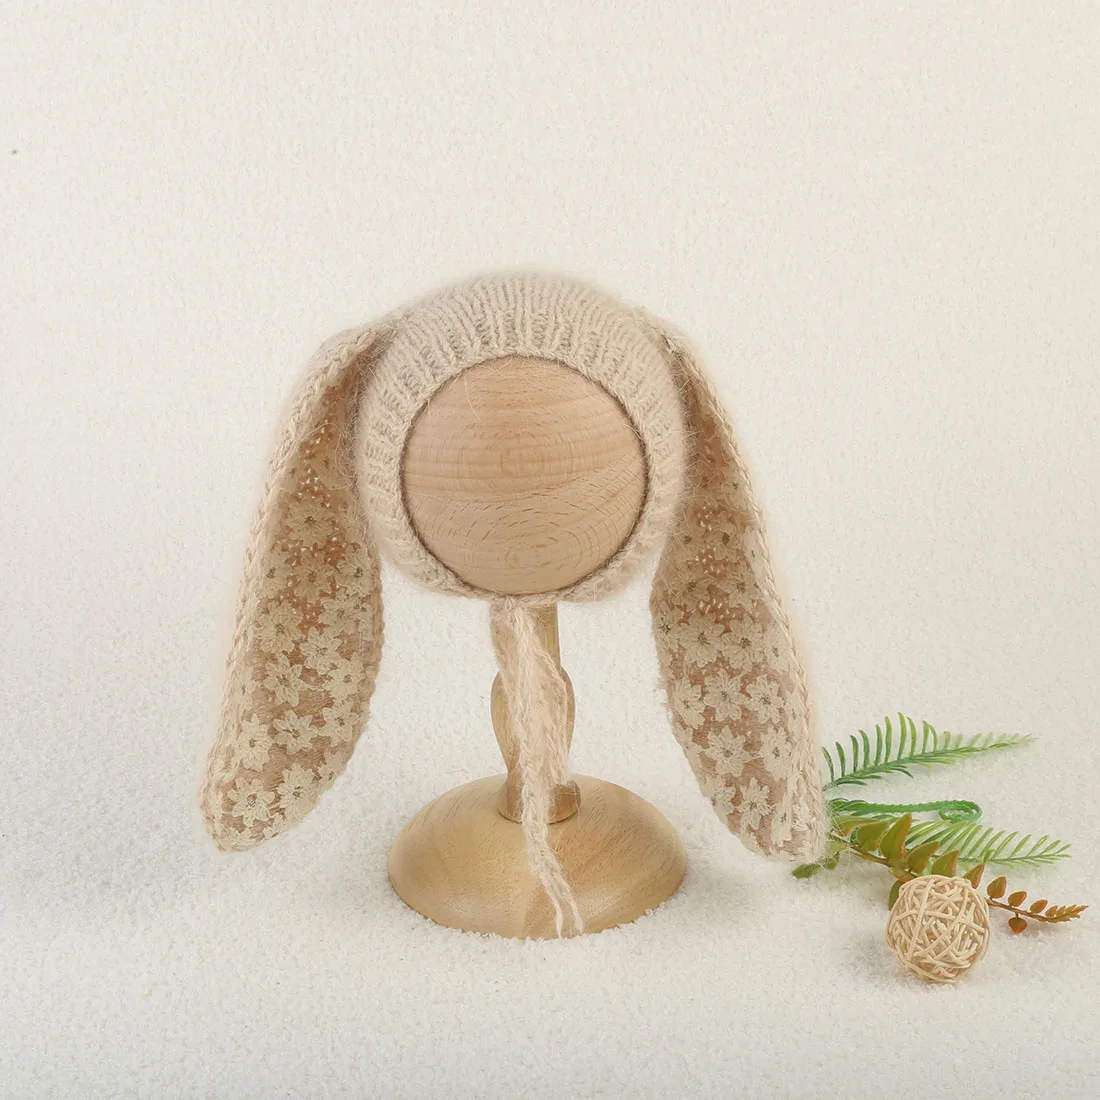 

Soft Knitted Stretch Angora Rabbit Bonnet With Big Ears Newborn Photography Props Jersey Crochet Fuzzy Animal Hat Photo Shoot